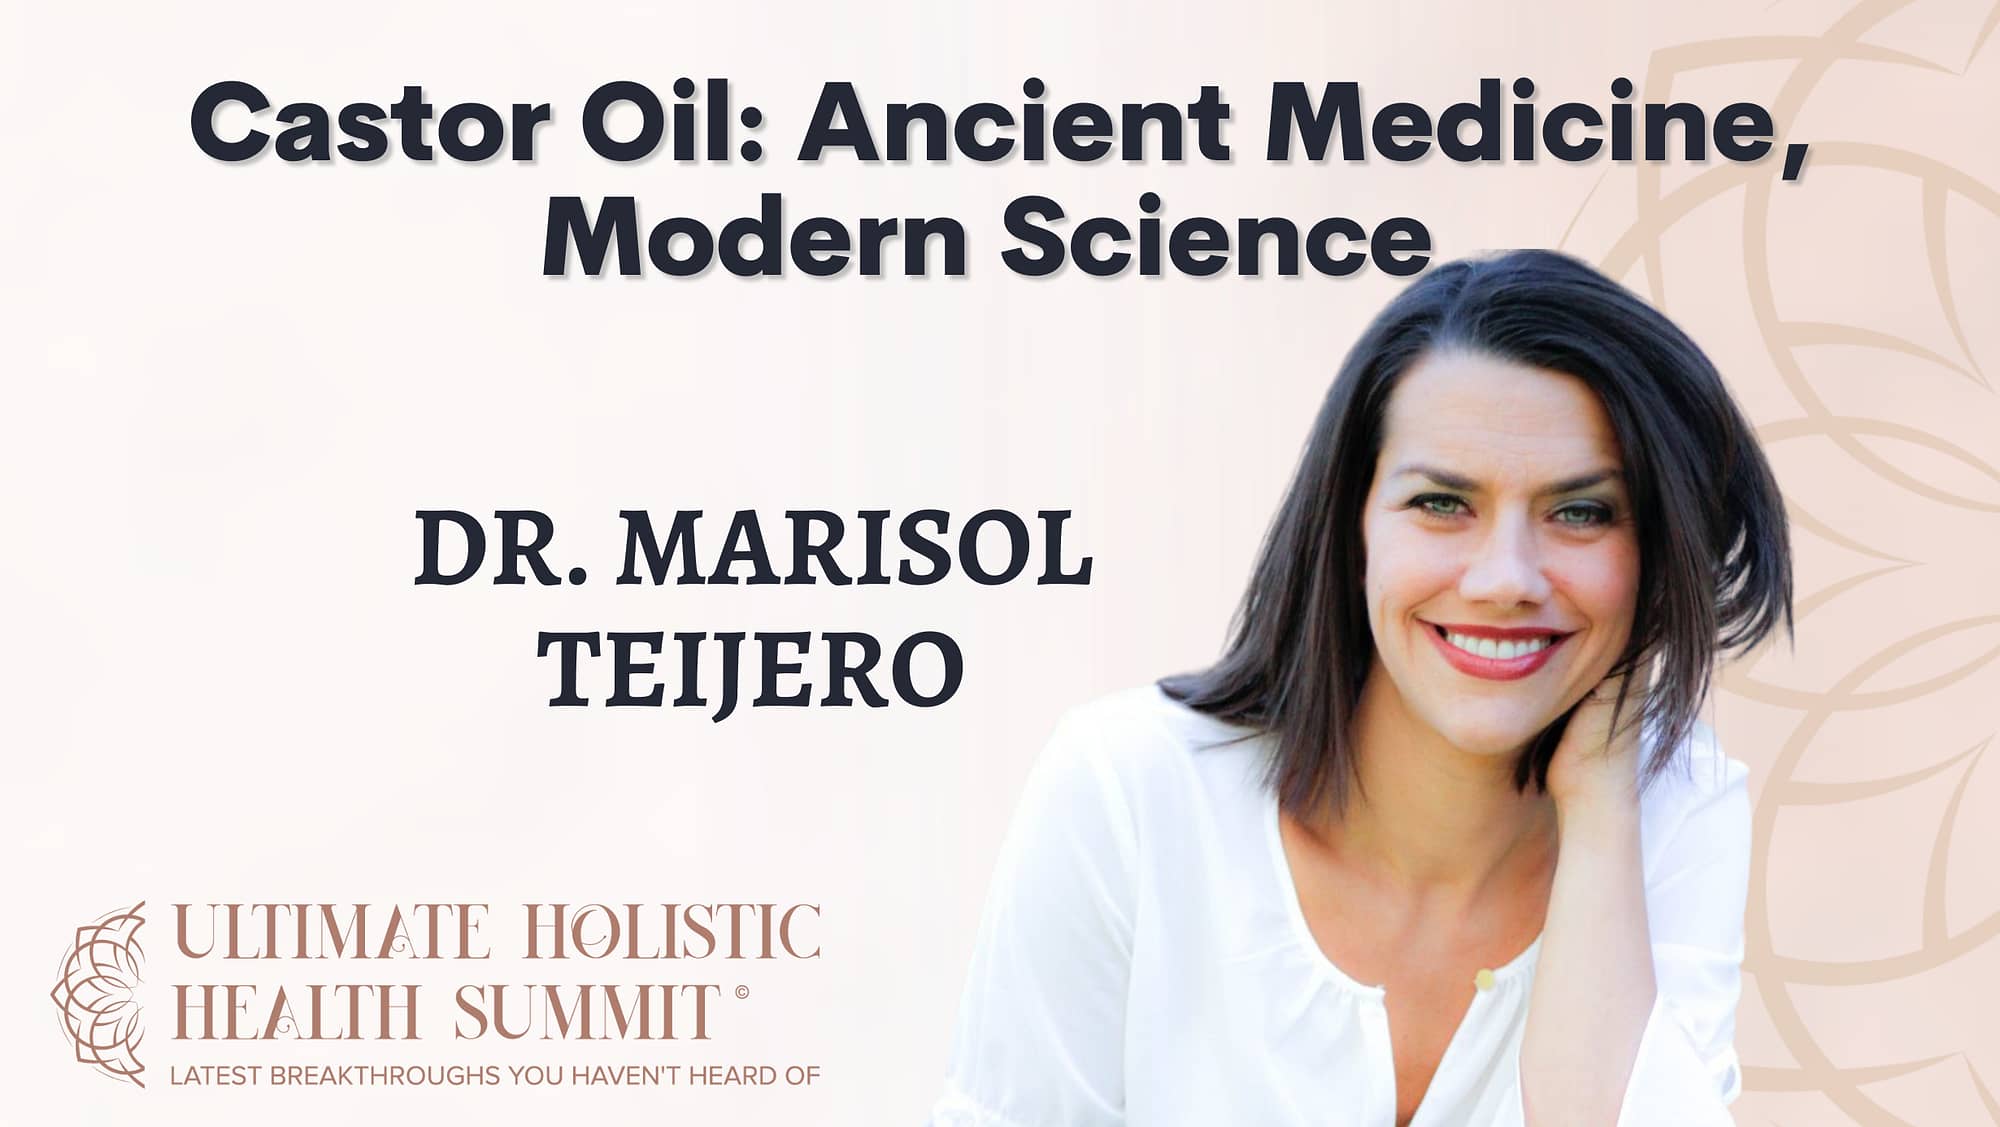 Castor Oil: Ancient Medicine, Modern Science